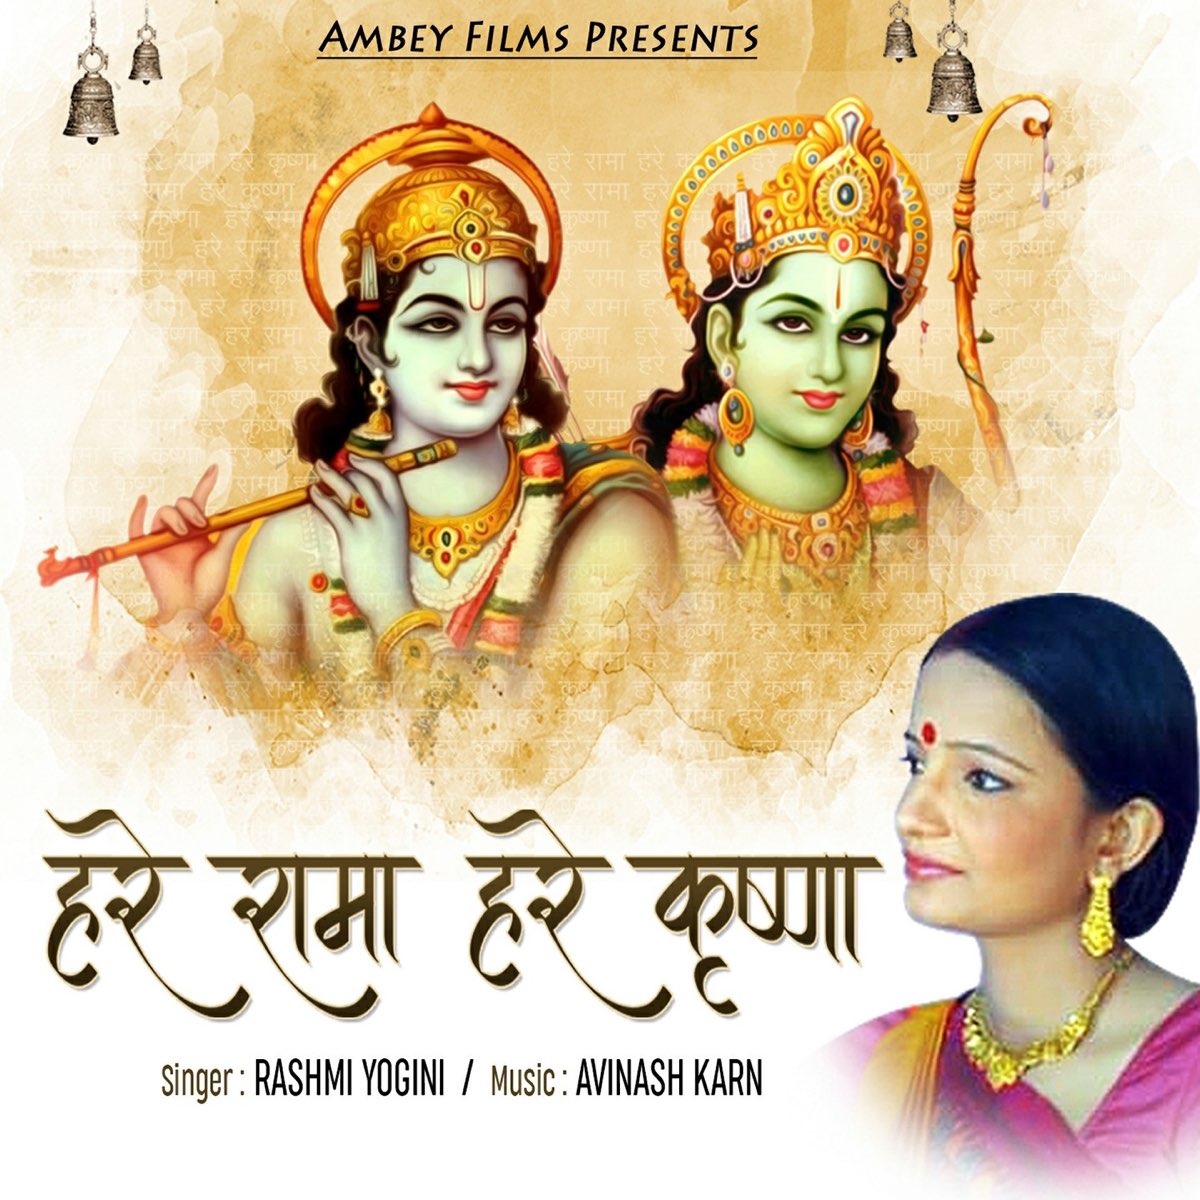 Hare Rama Hare Krishna - EP by Rashmi Yogini on Apple Music